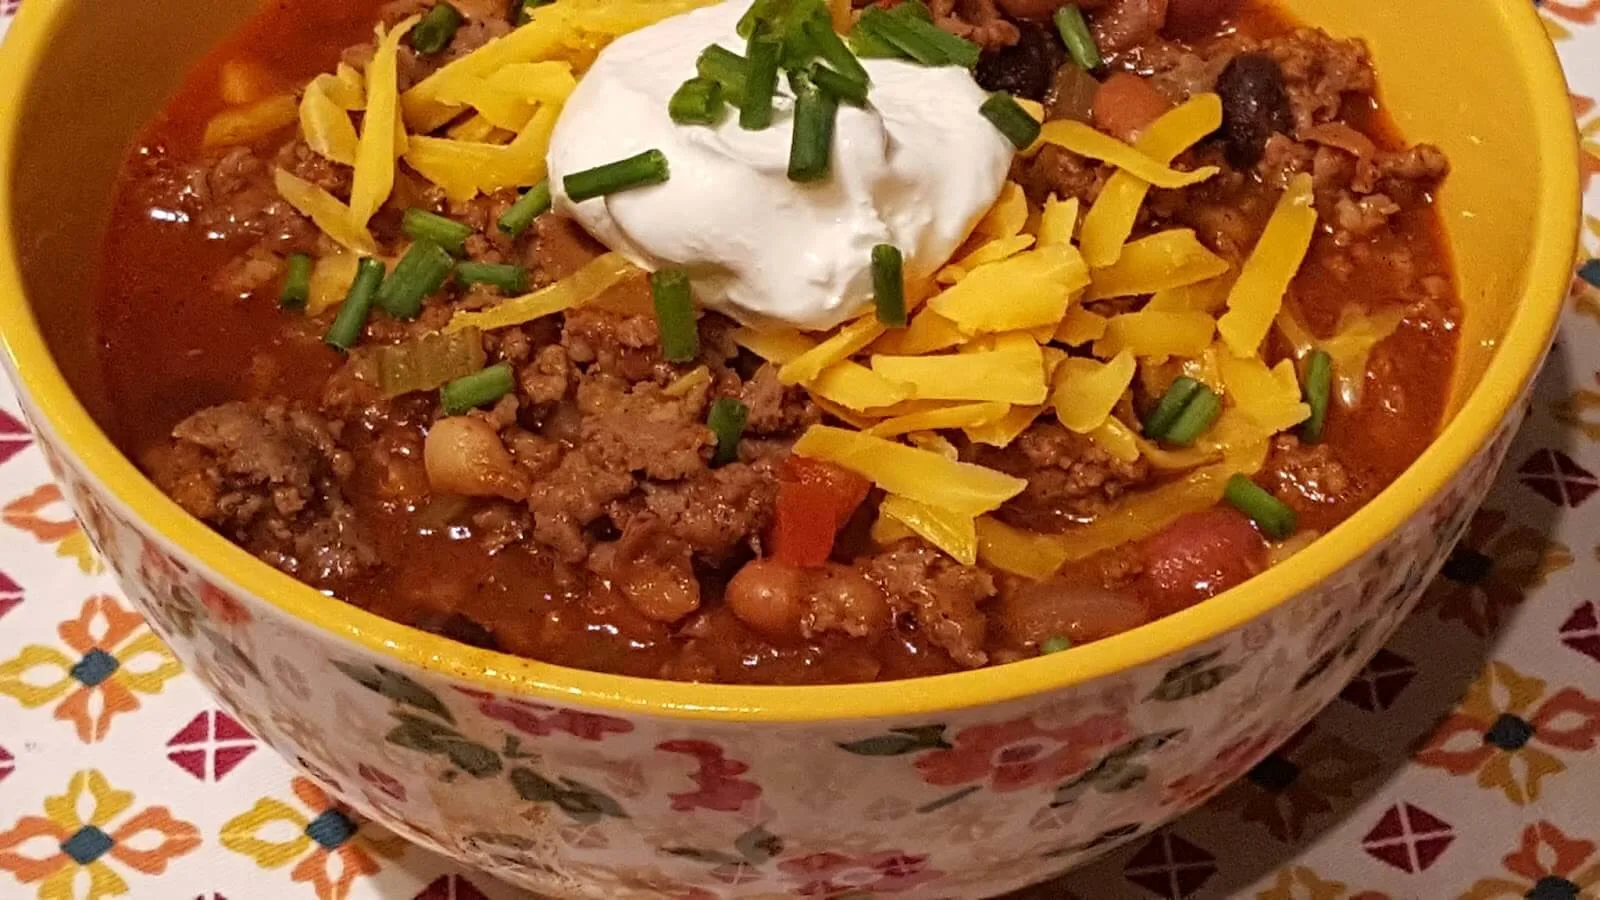 Chili Con Carne in a yellow bowl